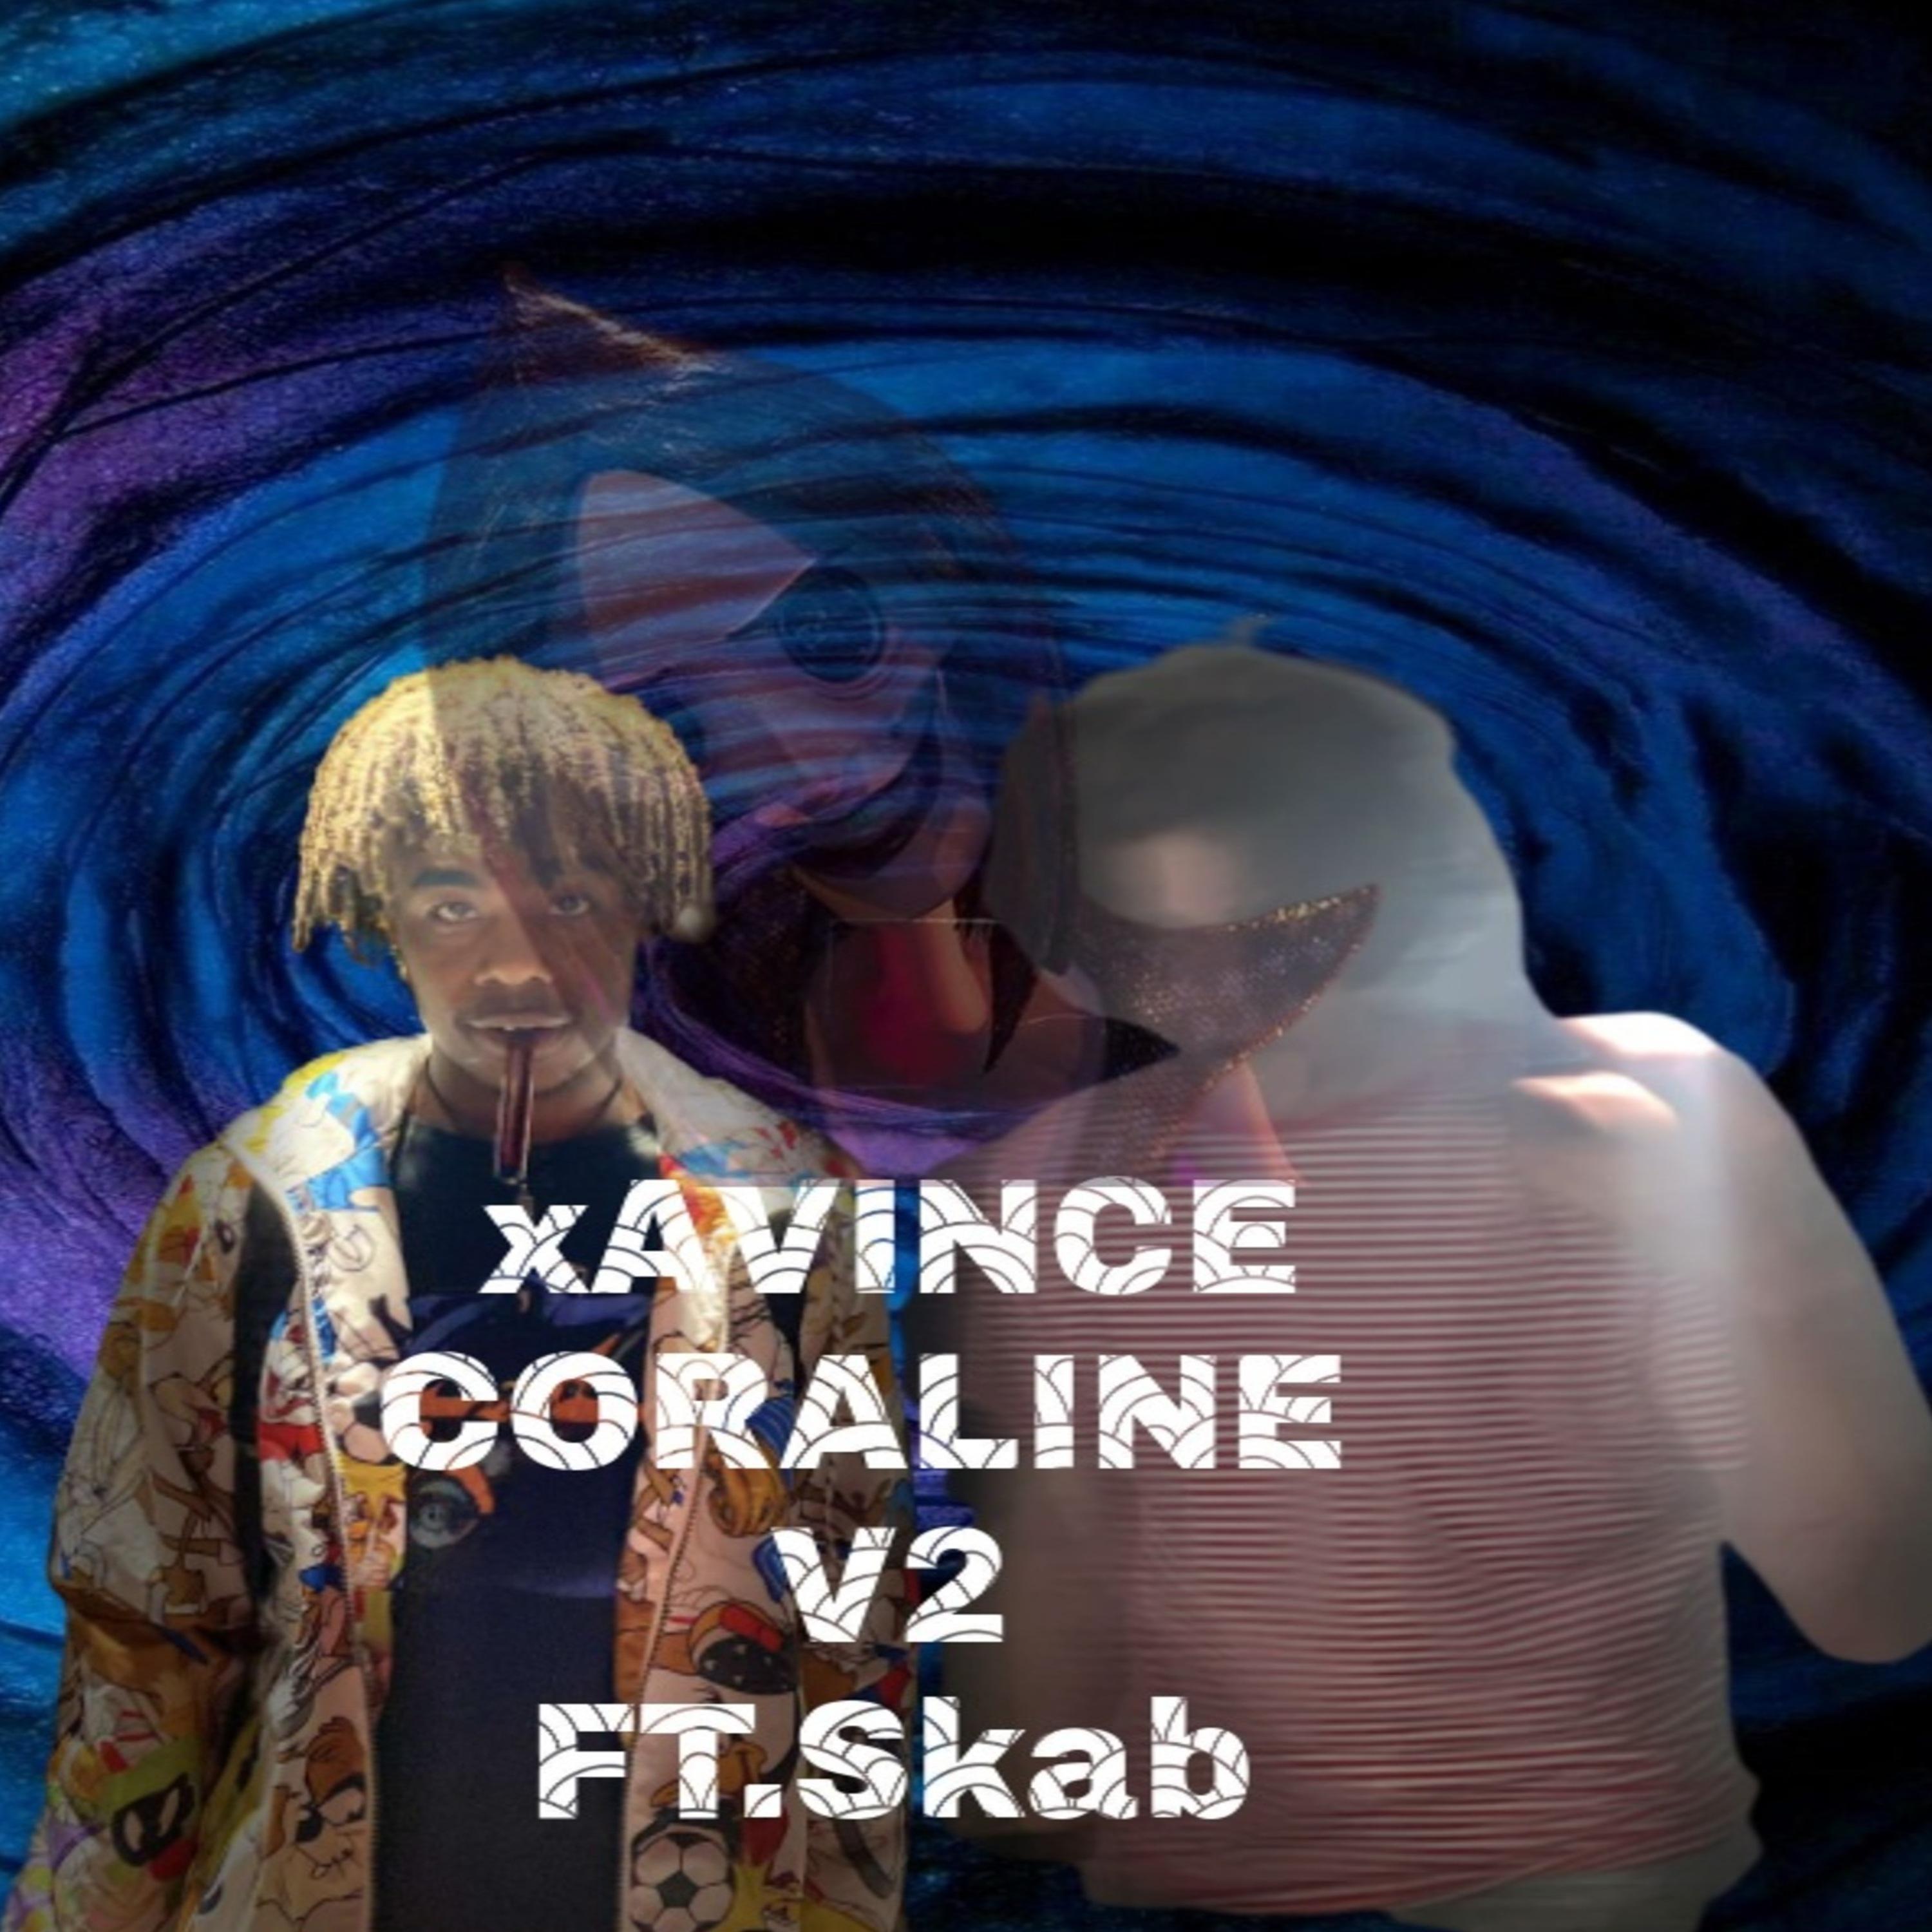 Xavince - Coraline V2 (feat. Skab)